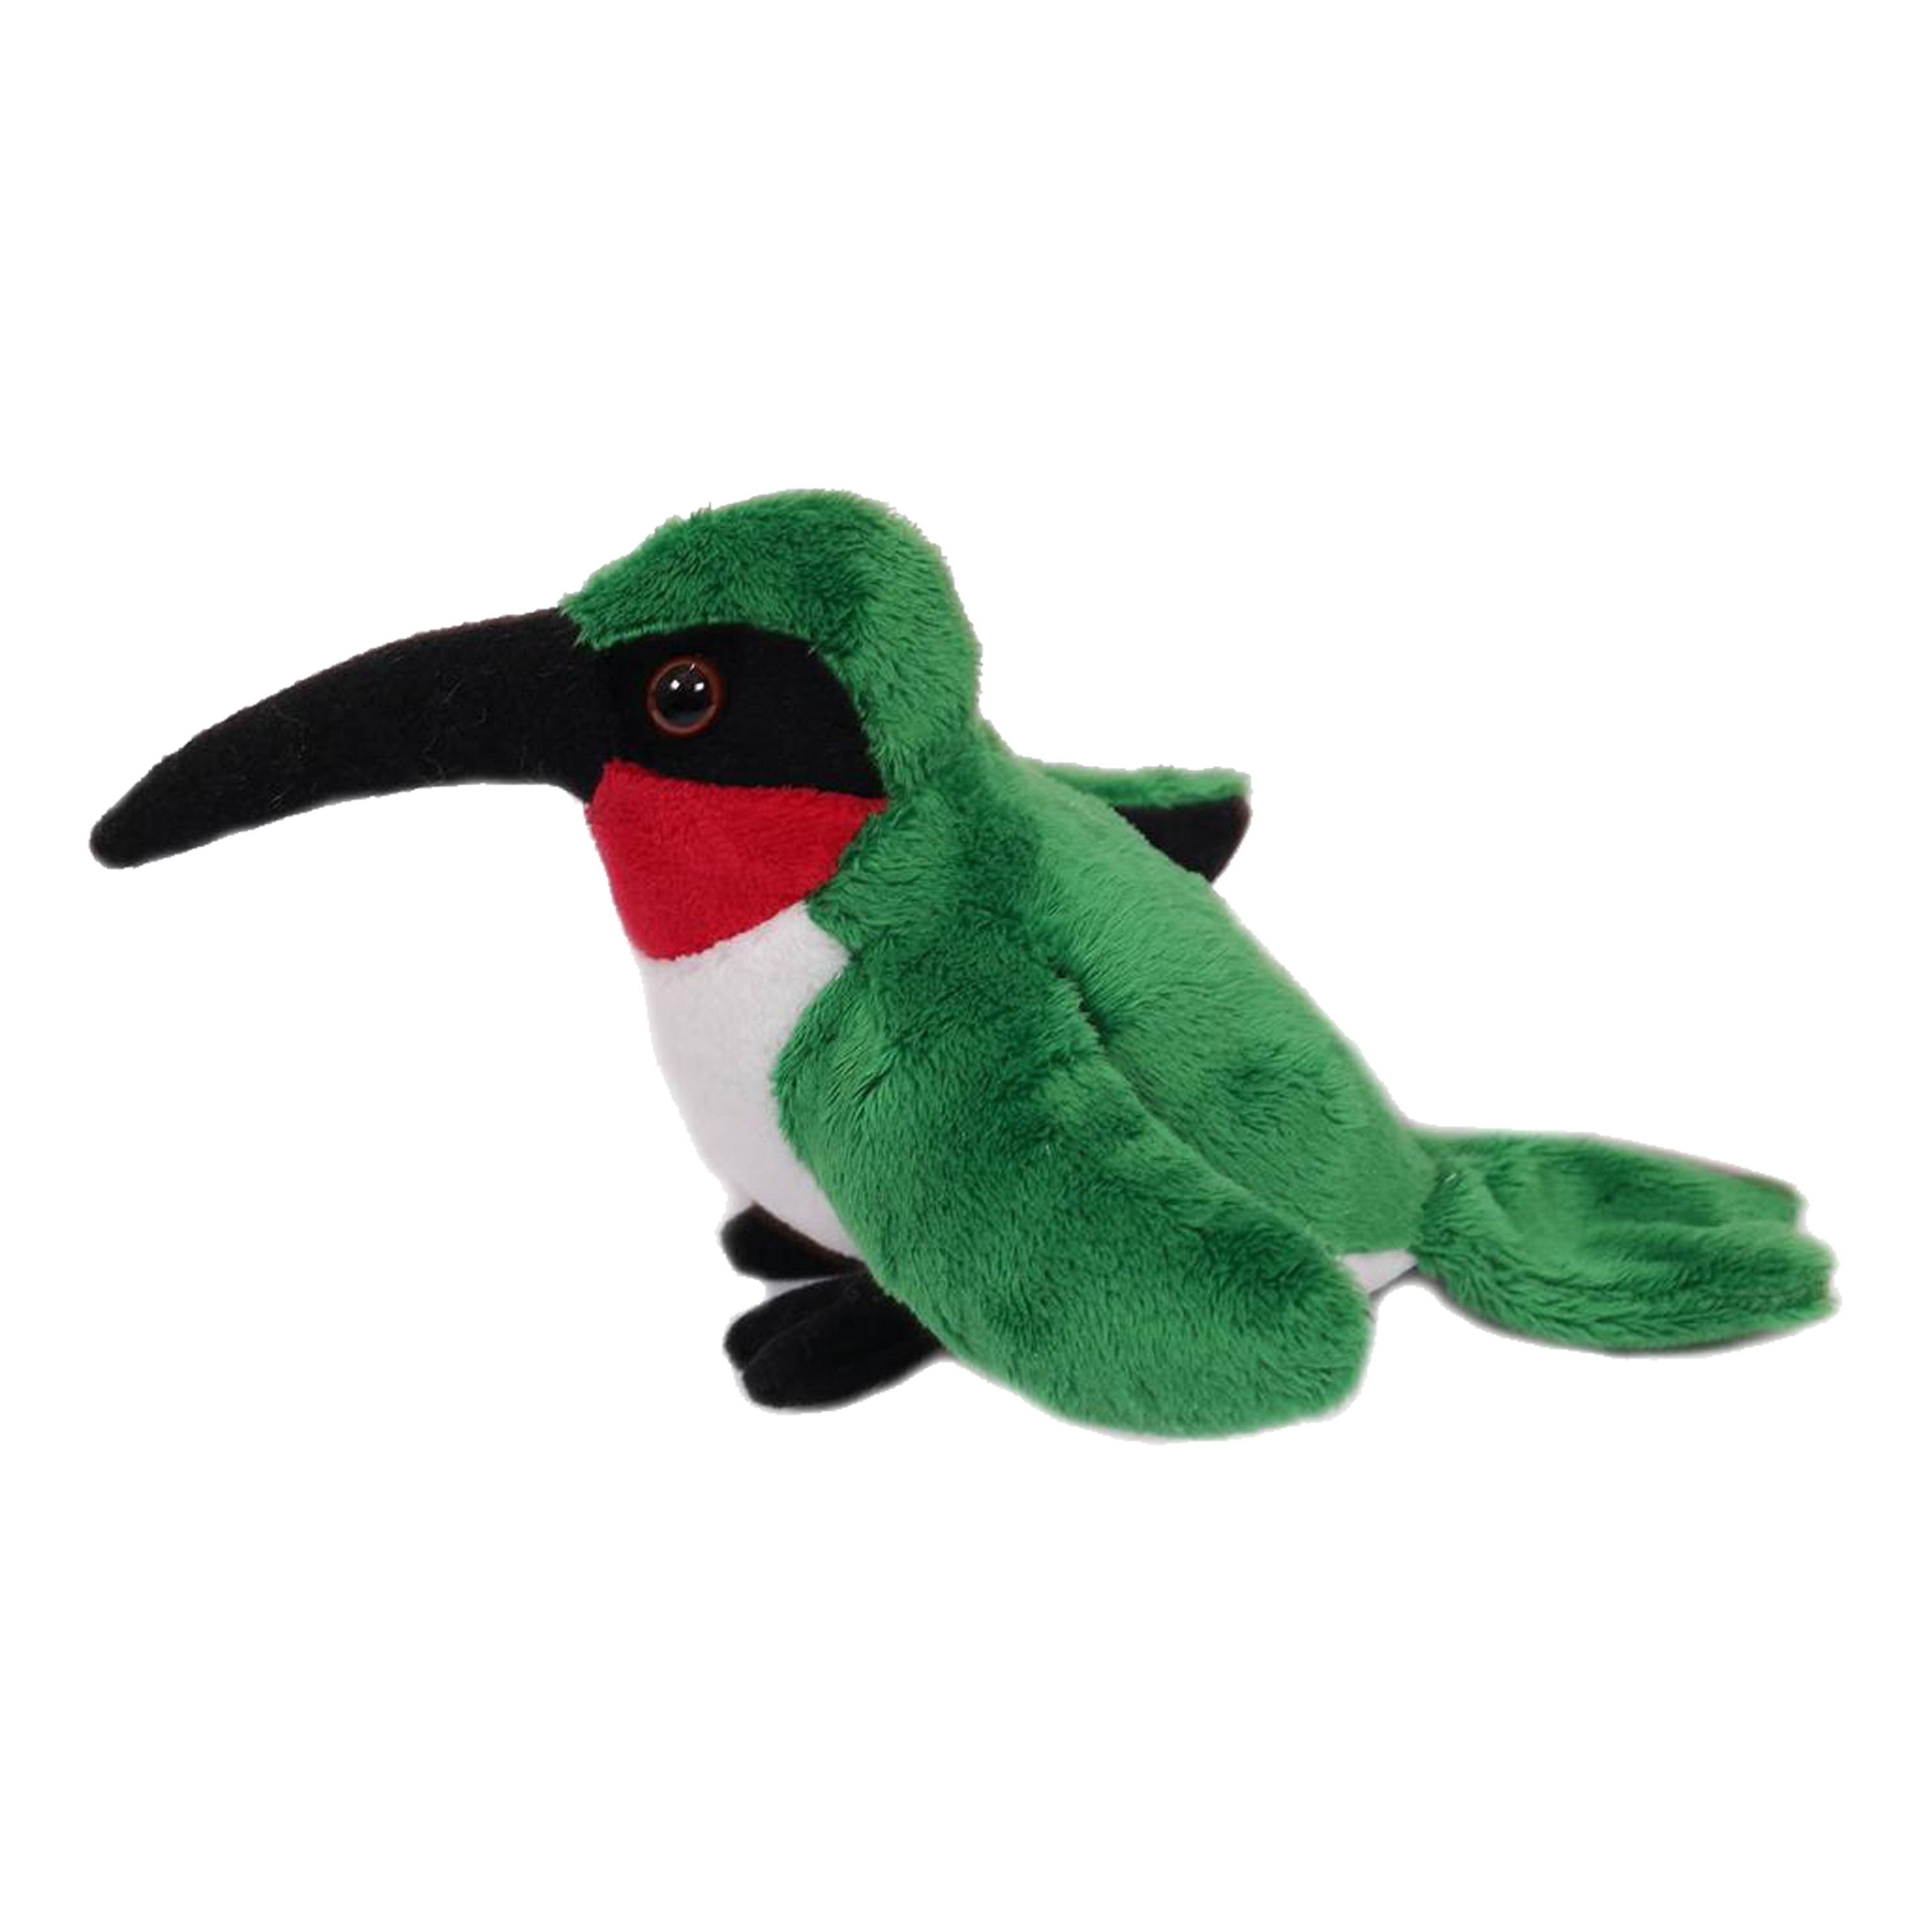 Pia Toys Knuffeldier Kolibri vogel zachte pluche stof groen kwaliteit knuffels 13 cm